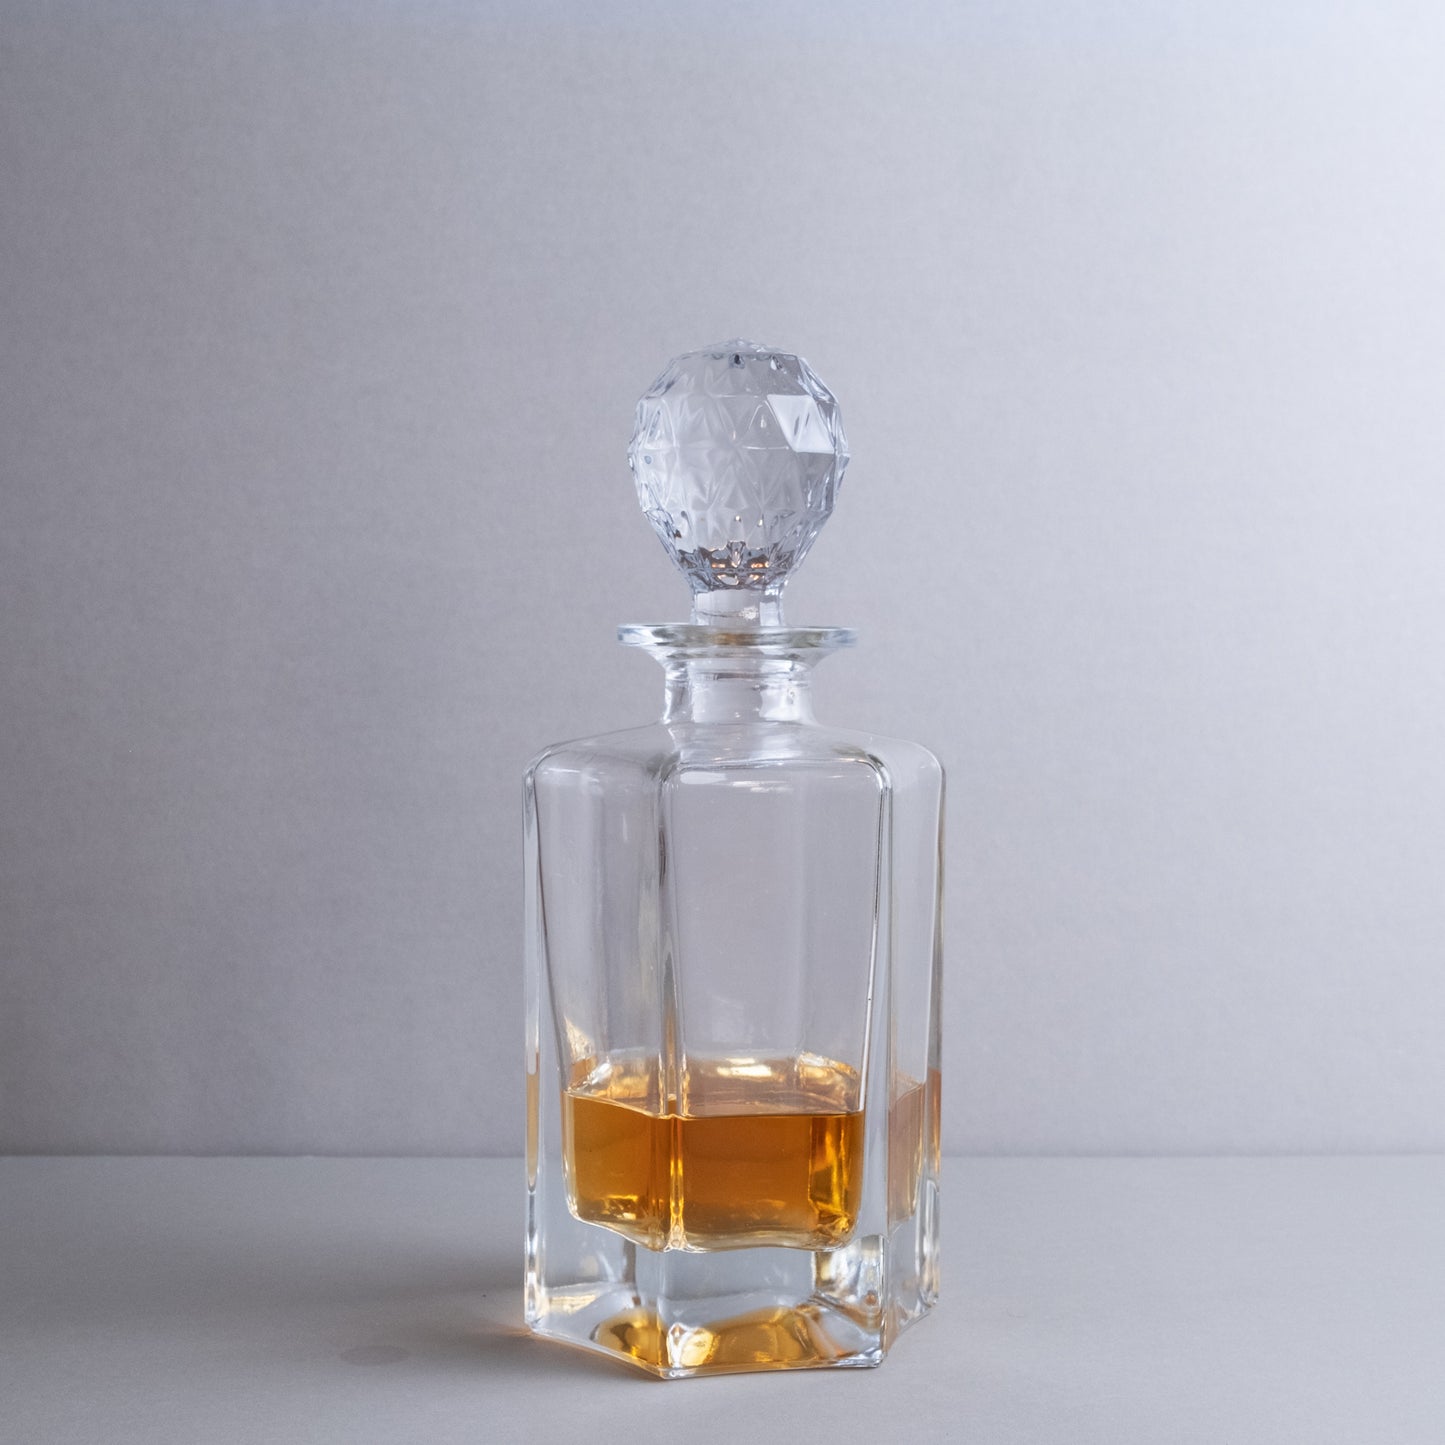 M&B Rye Crystal Whisky Decanter